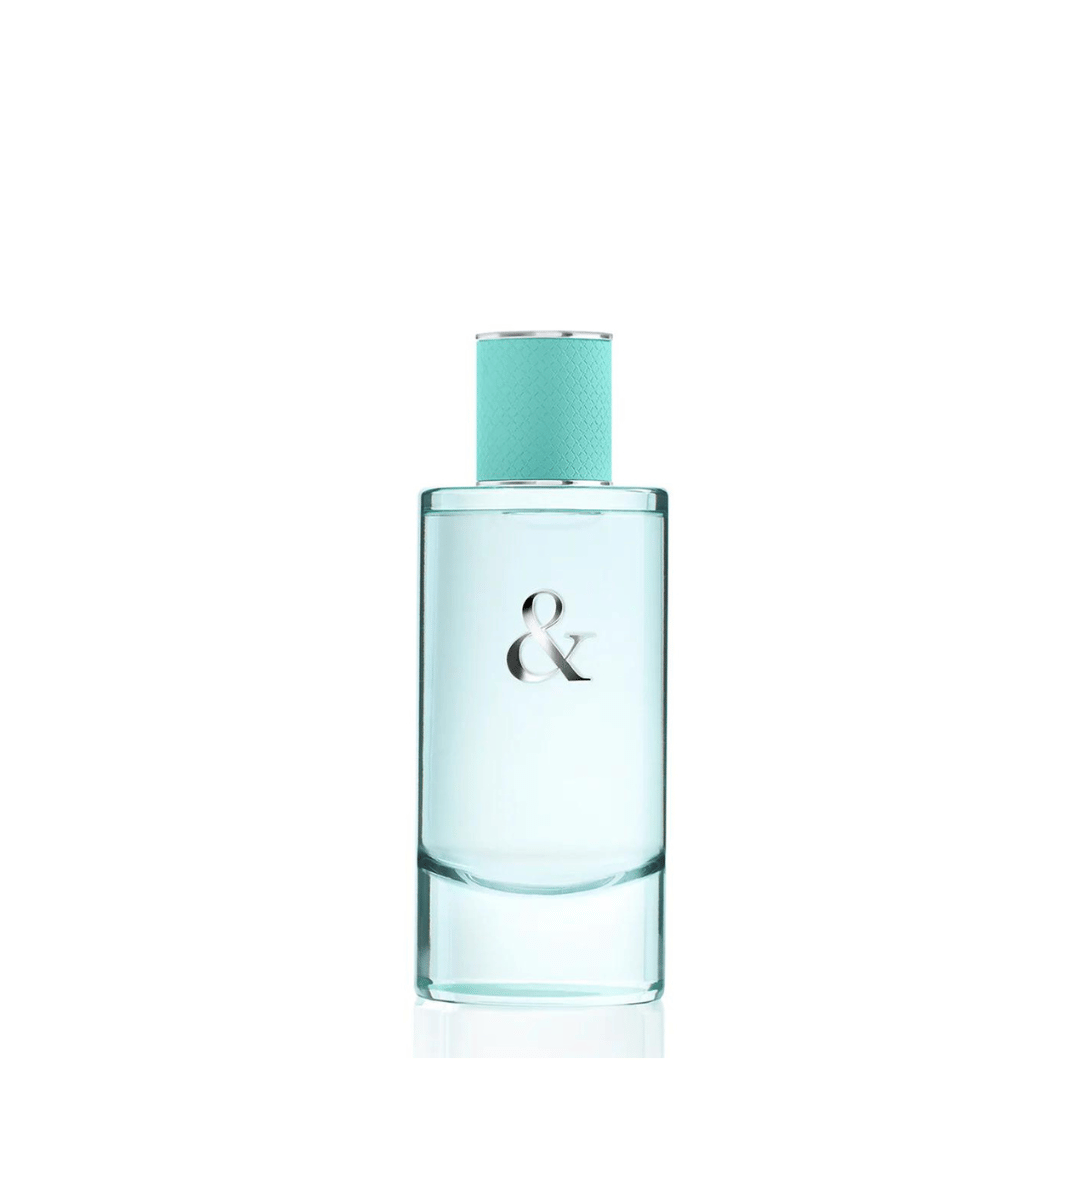 Tiffany & Love TIFFANY & CO. Eau de Parfum